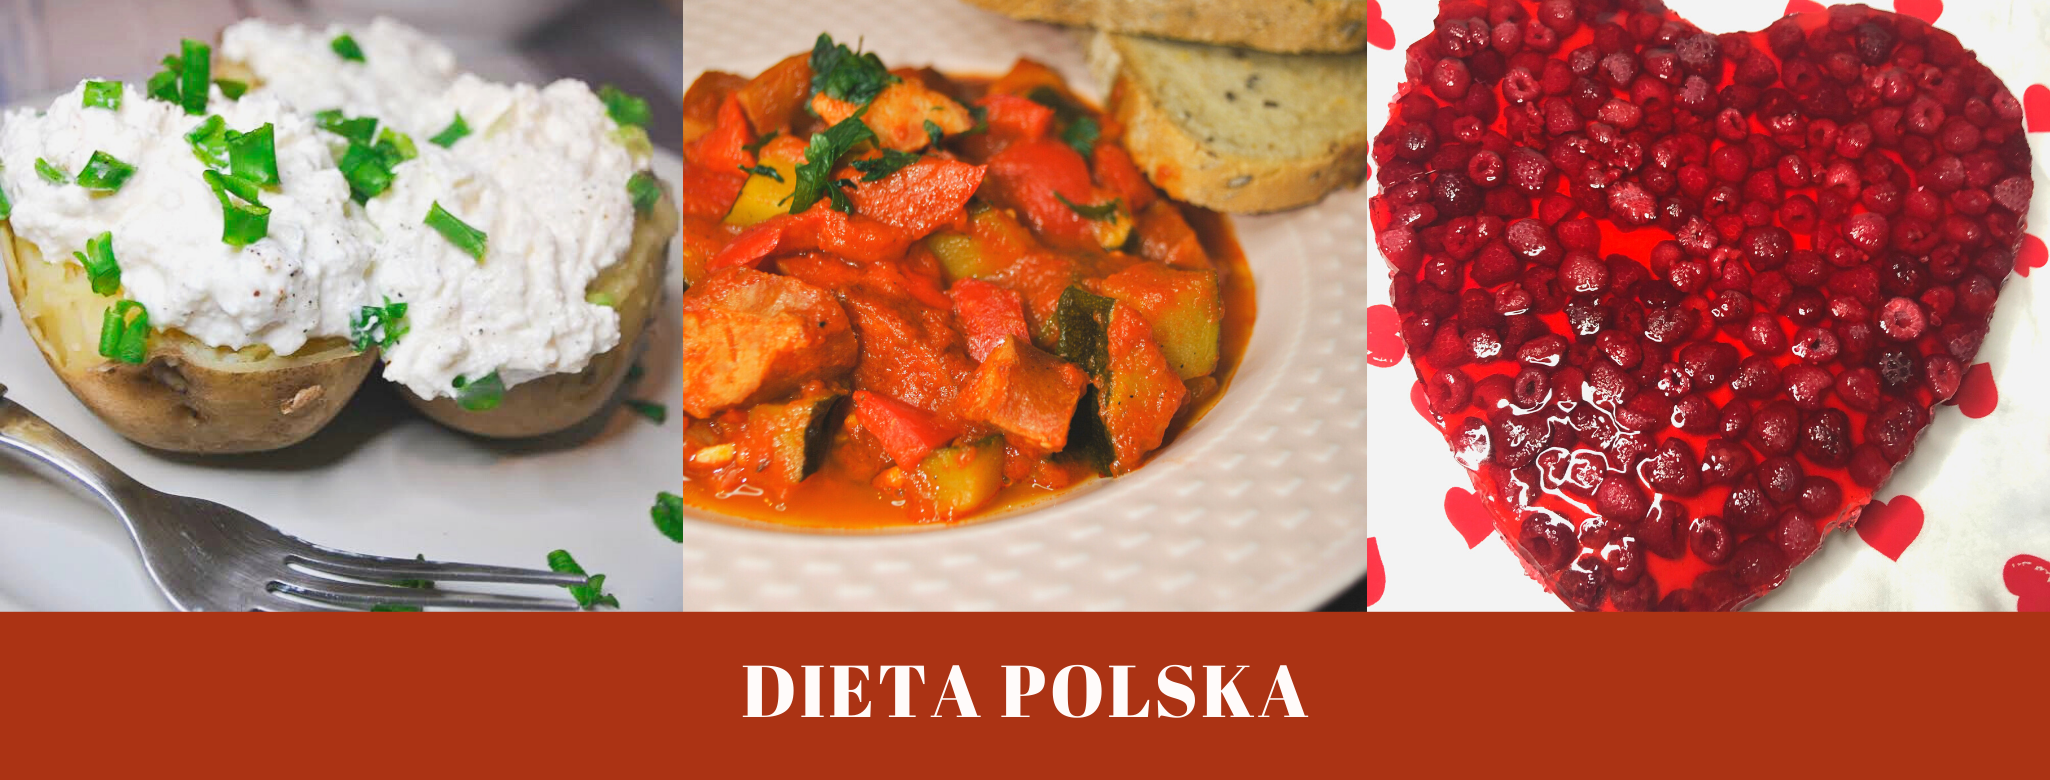 dieta polska